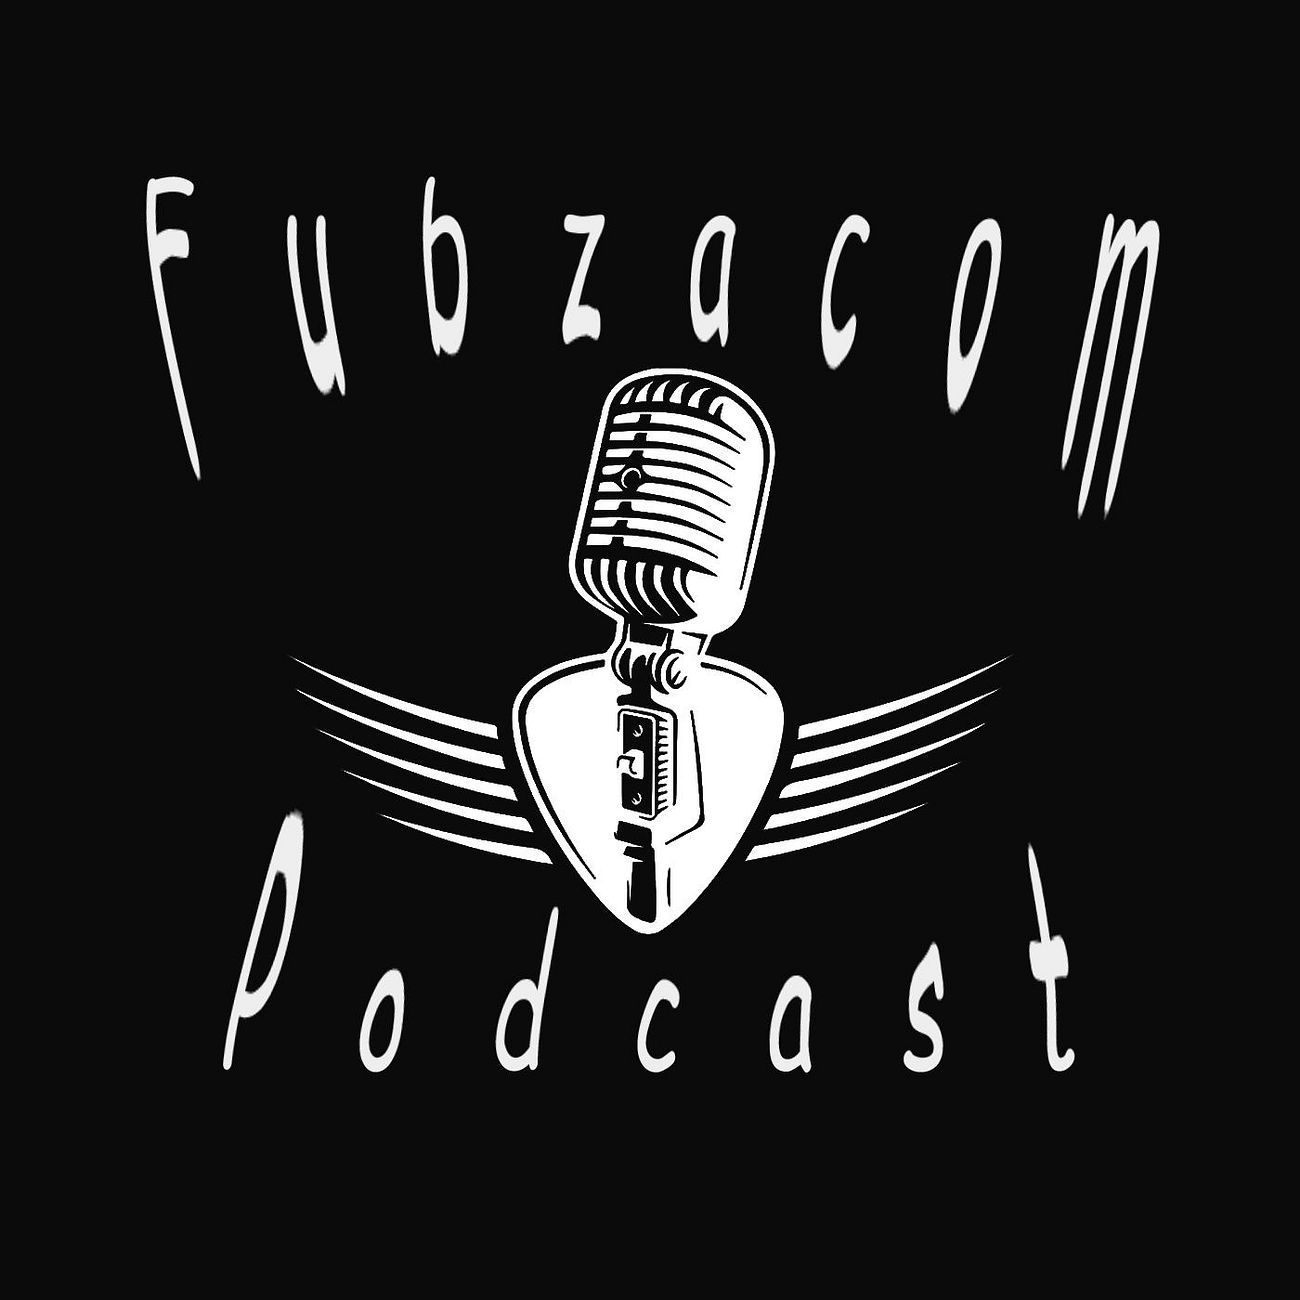 Fubzacom Podcast